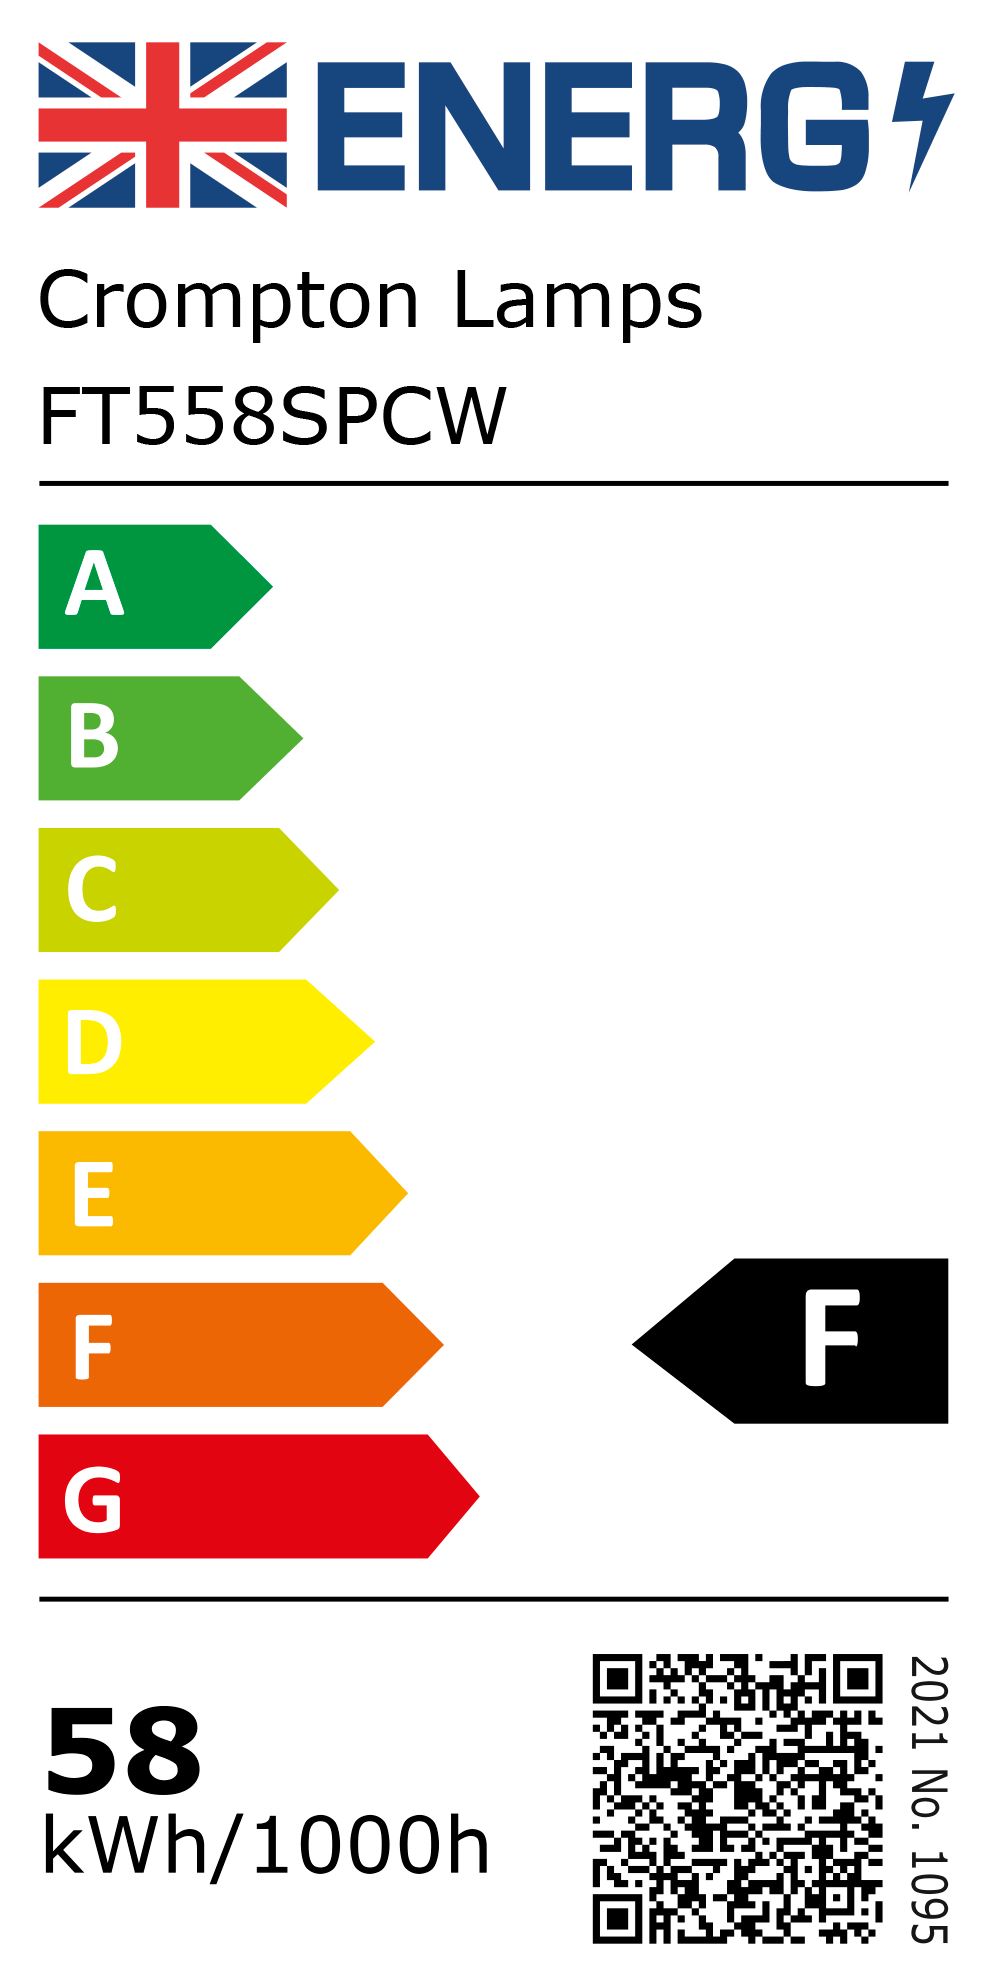 New 2021 Energy Rating Label: Stock Code FT558SPCW